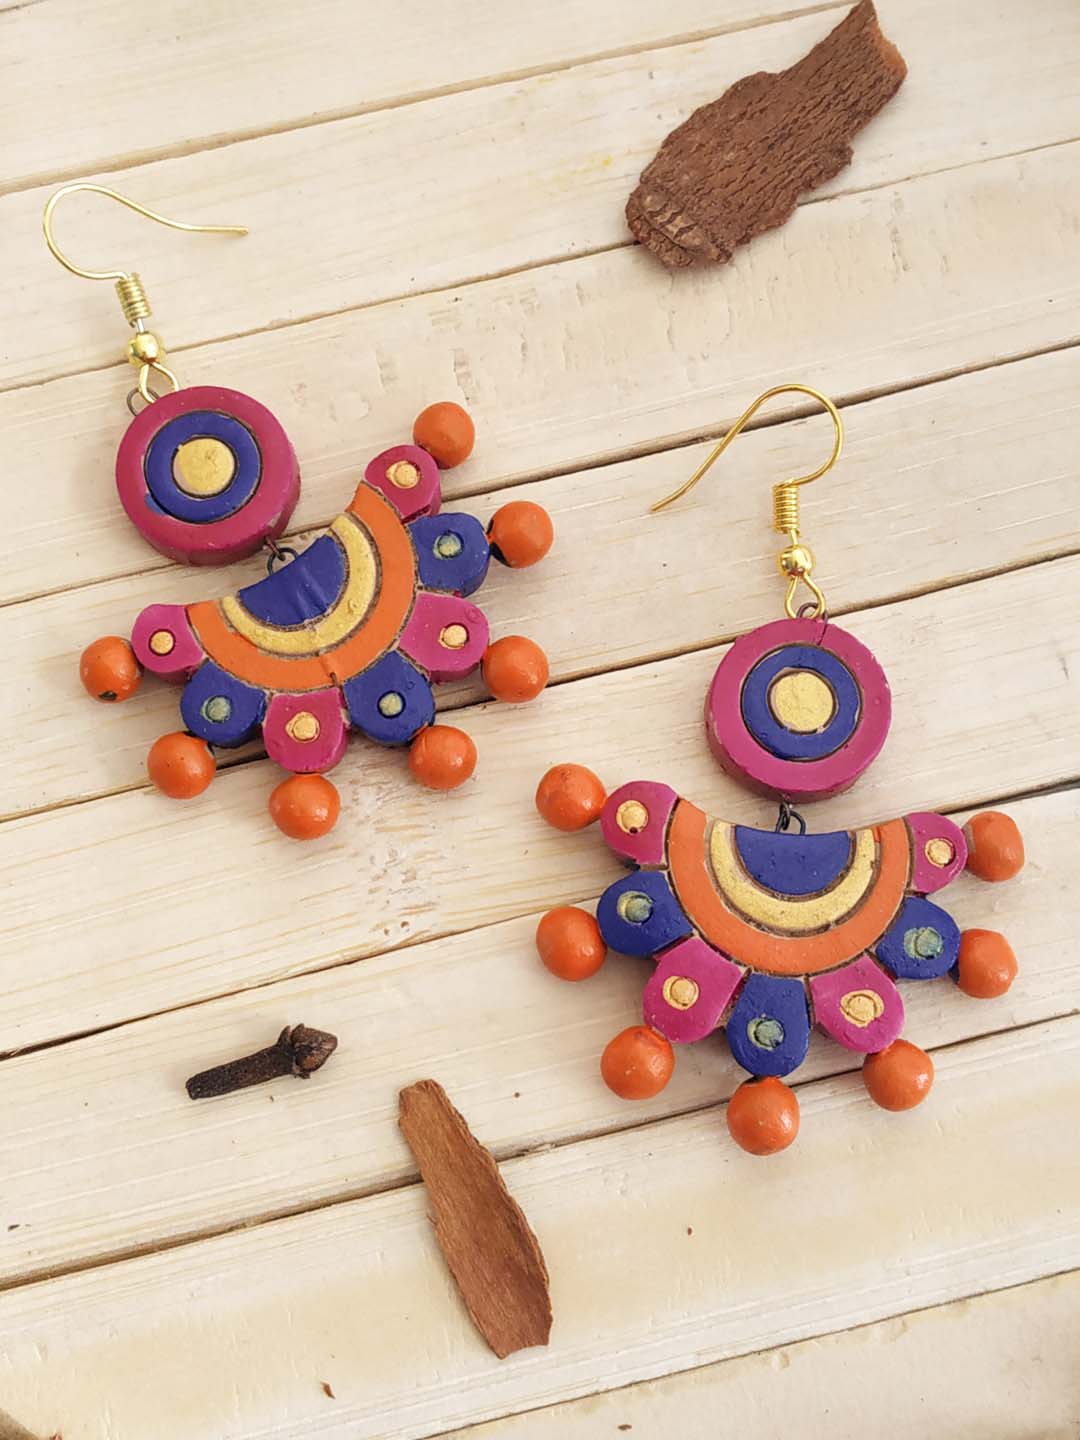 Kiya- Terracotta earrings